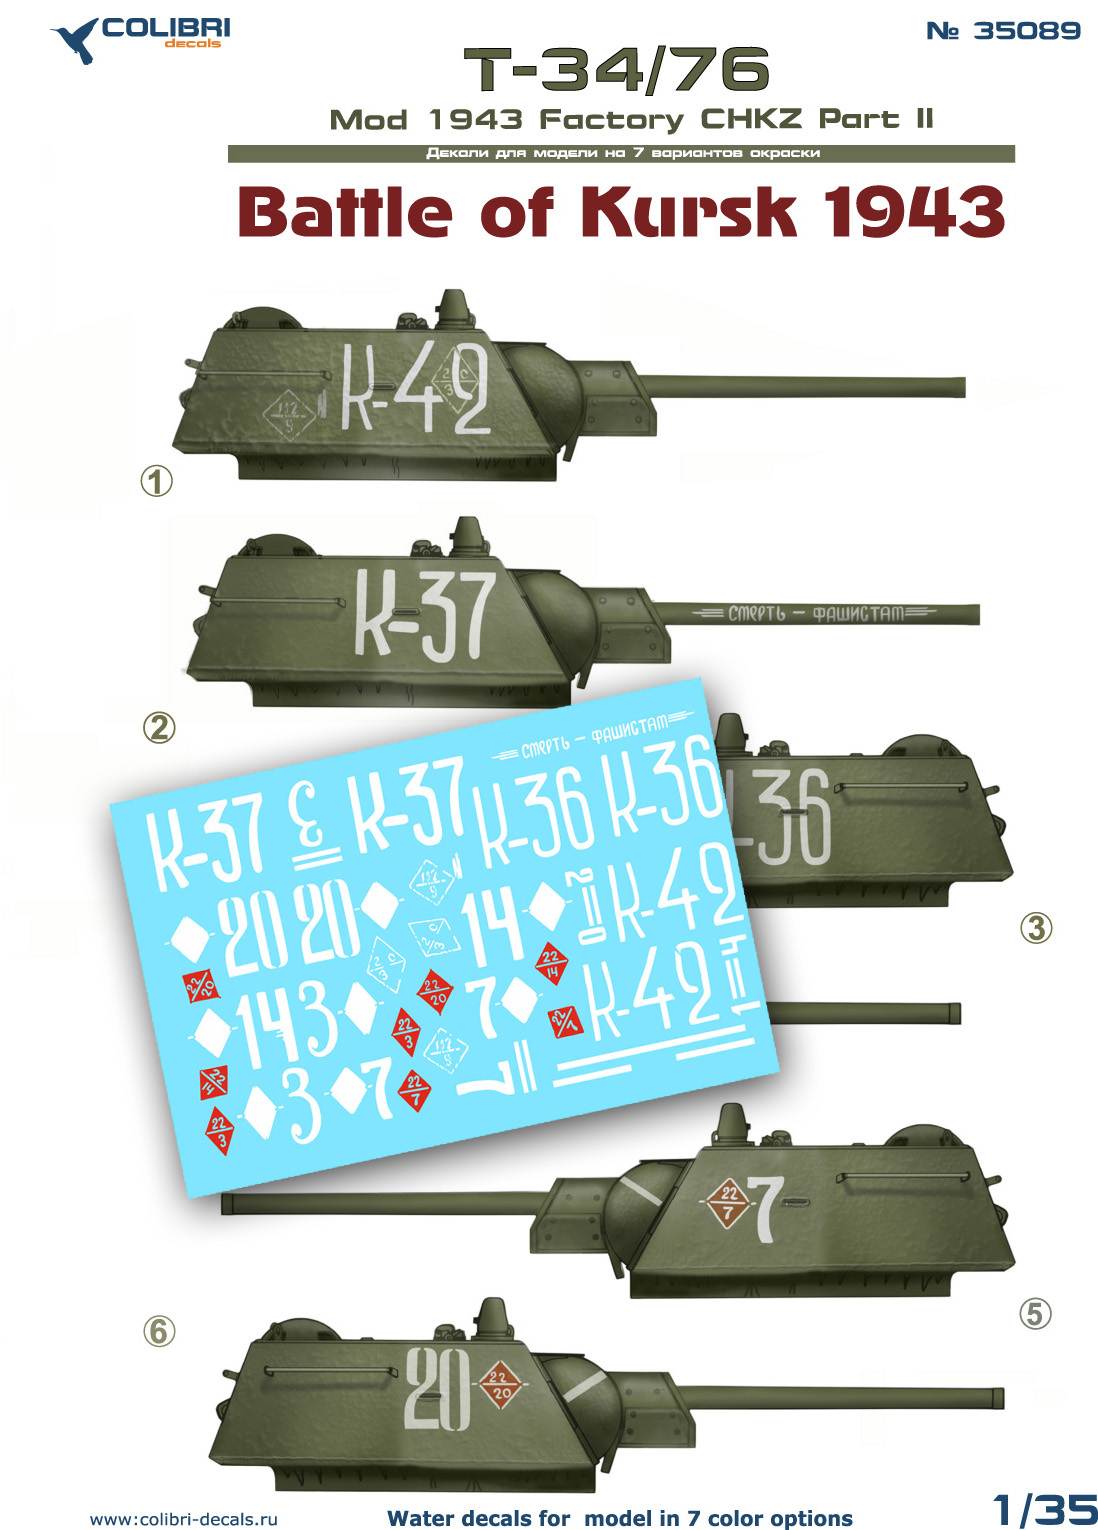 Декаль 1/35 Т-34/76 мod 1943 Factory CHKZ Part II Battle of Kursk 1943 (Colibri Decals)